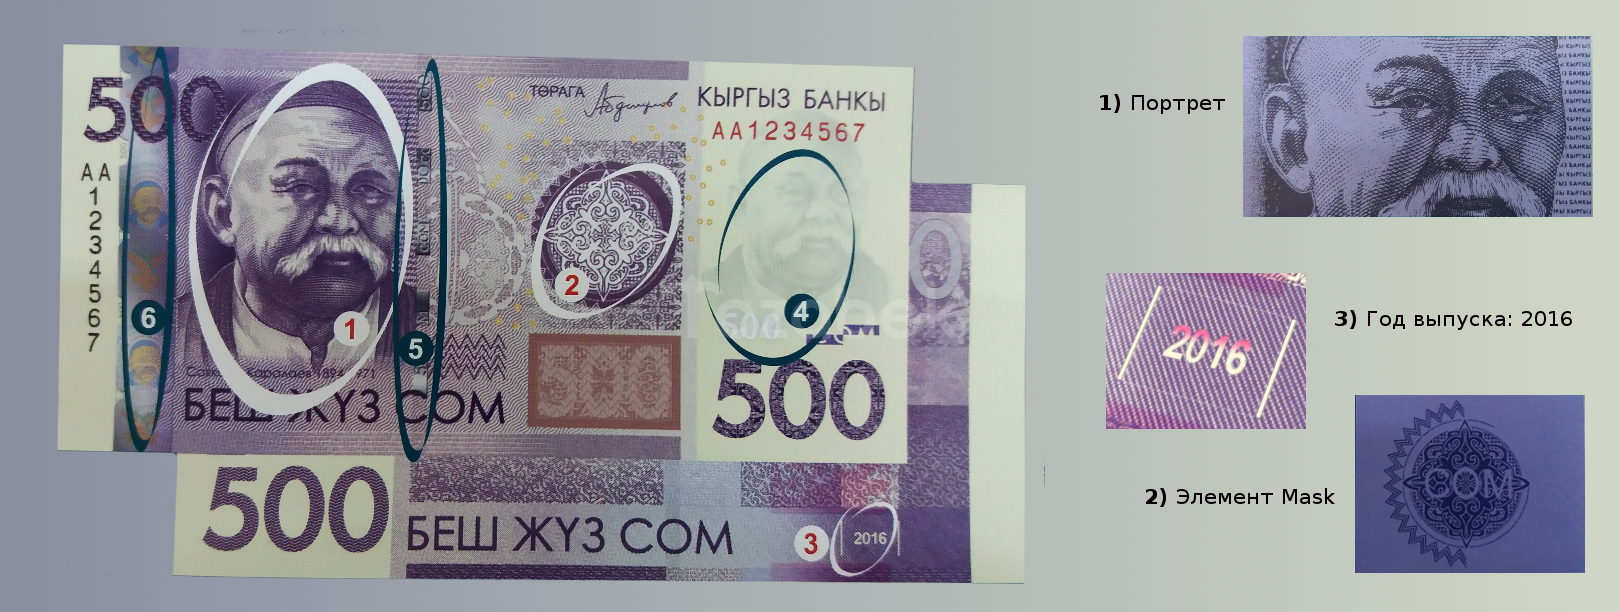 Валюта Кыргызстана - банкнота номиналом 500 сомов образца 2017 года. АКИpress